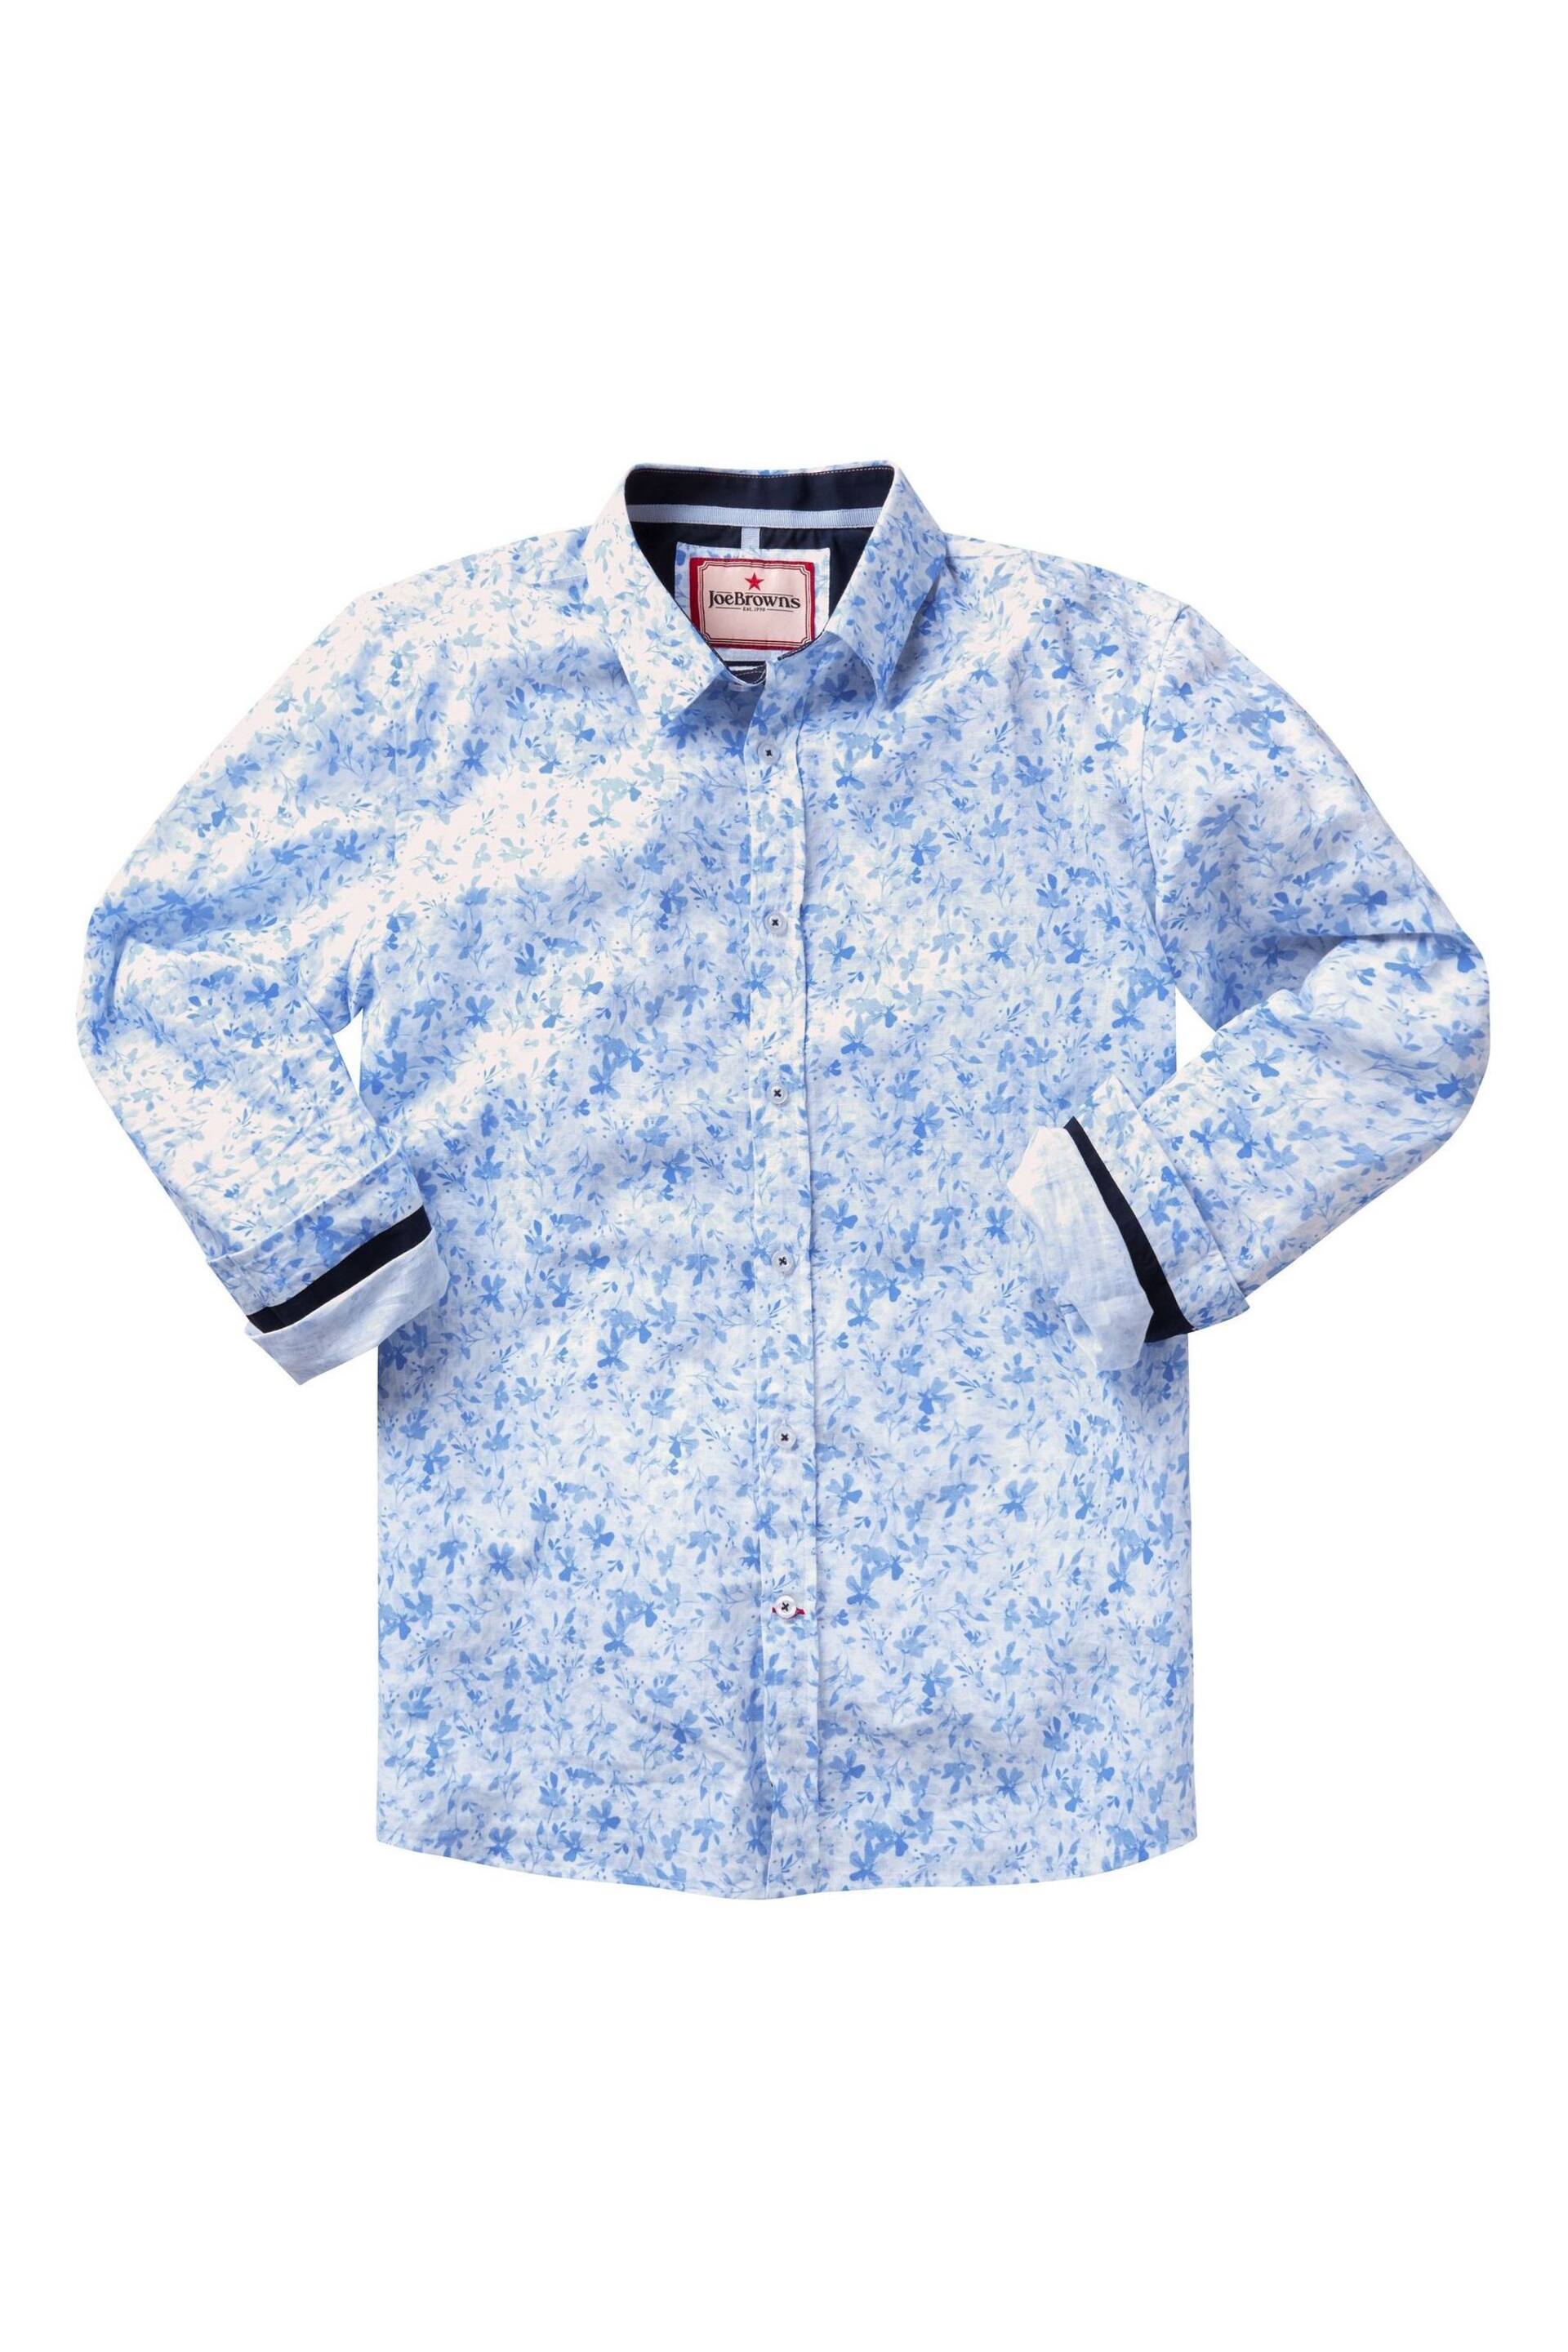 Joe Browns Blue Tonal Floral Linen Blend Long Sleeve Classic Collared Shirt - Image 5 of 5